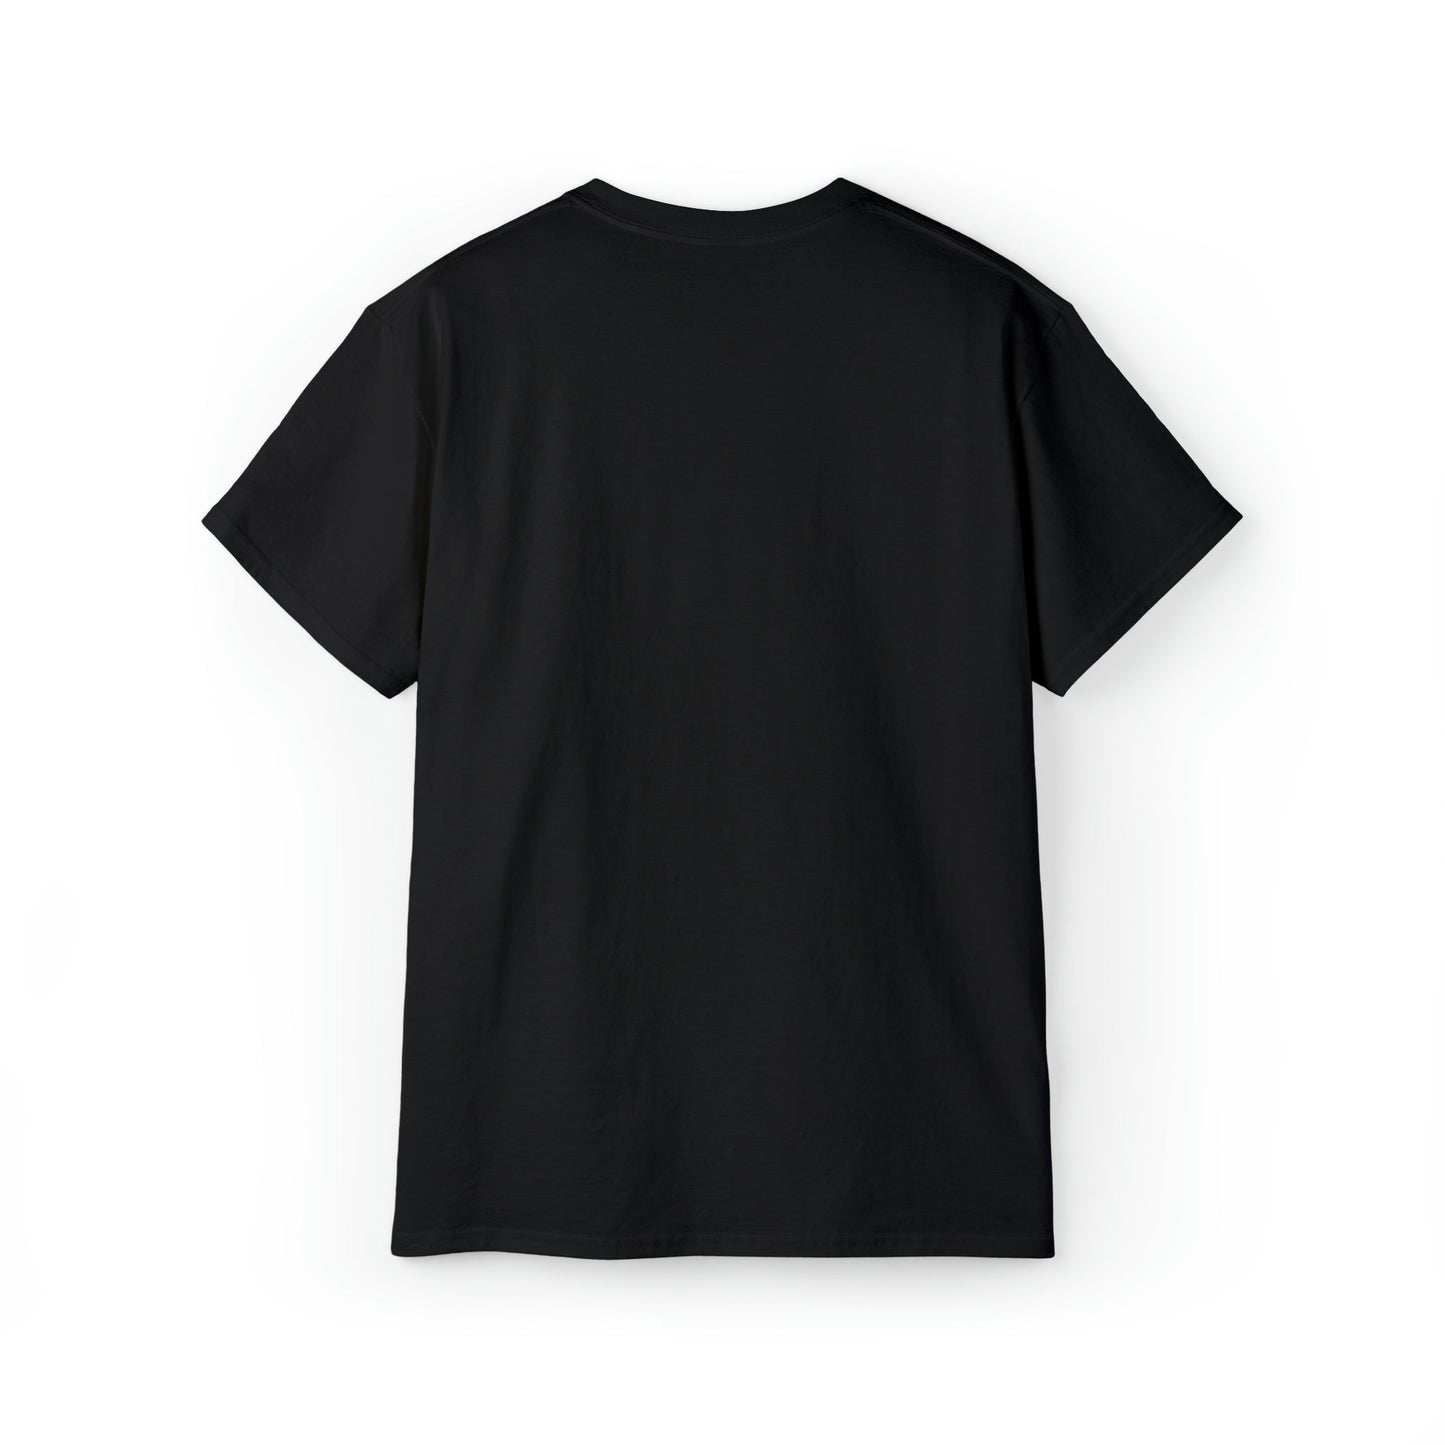 Printify T-Shirt Helm Of Awe Aegishjalmr V.K.N.G™ T-shirt